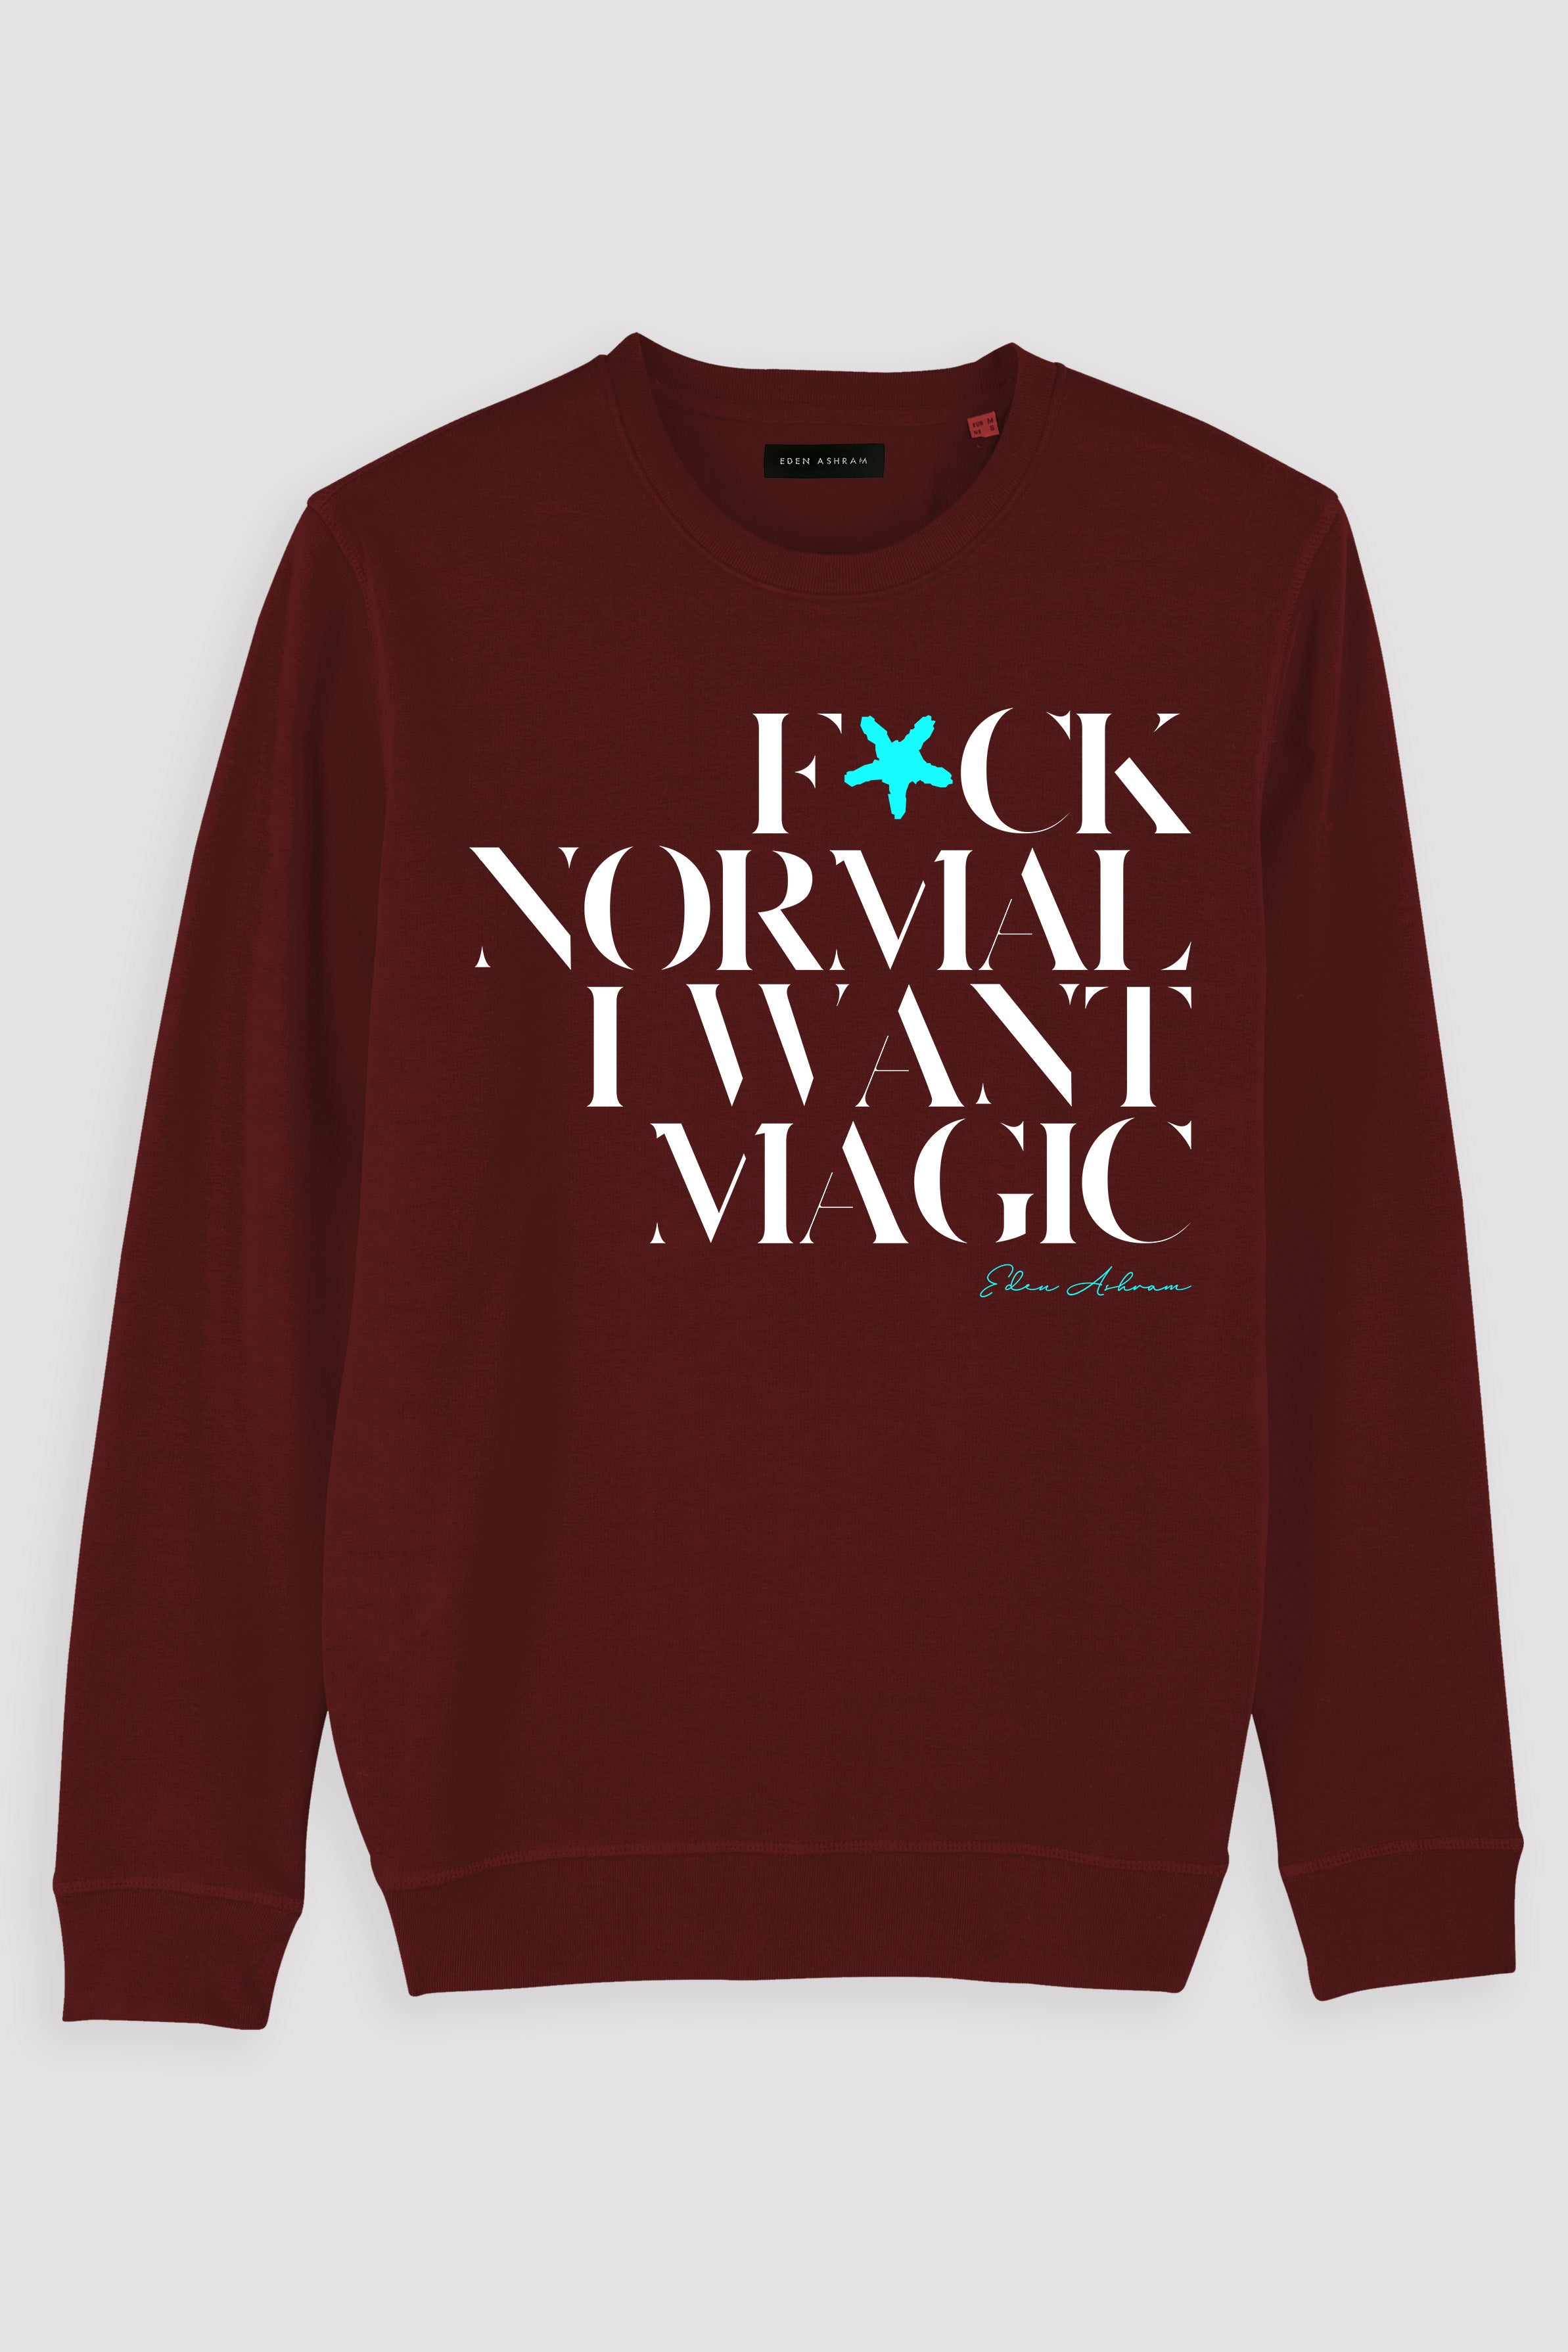 EDEN ASHRAM F*ck Normal I Want Magic Premium Crew Neck Sweatshirt Burgundy